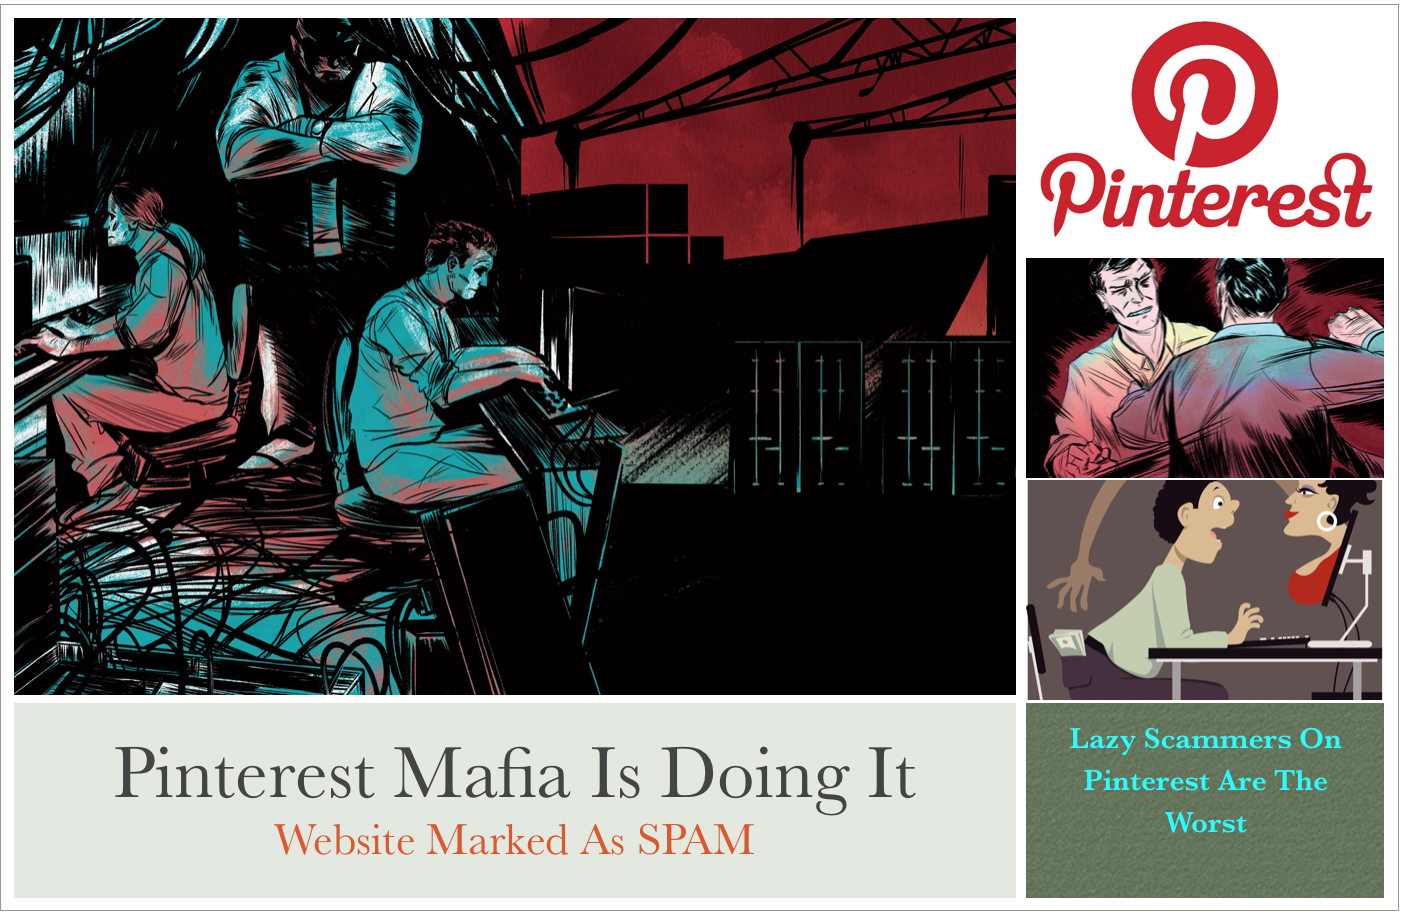 Website Marked As SPAM on Pinterest? The Mafia Is Doing It